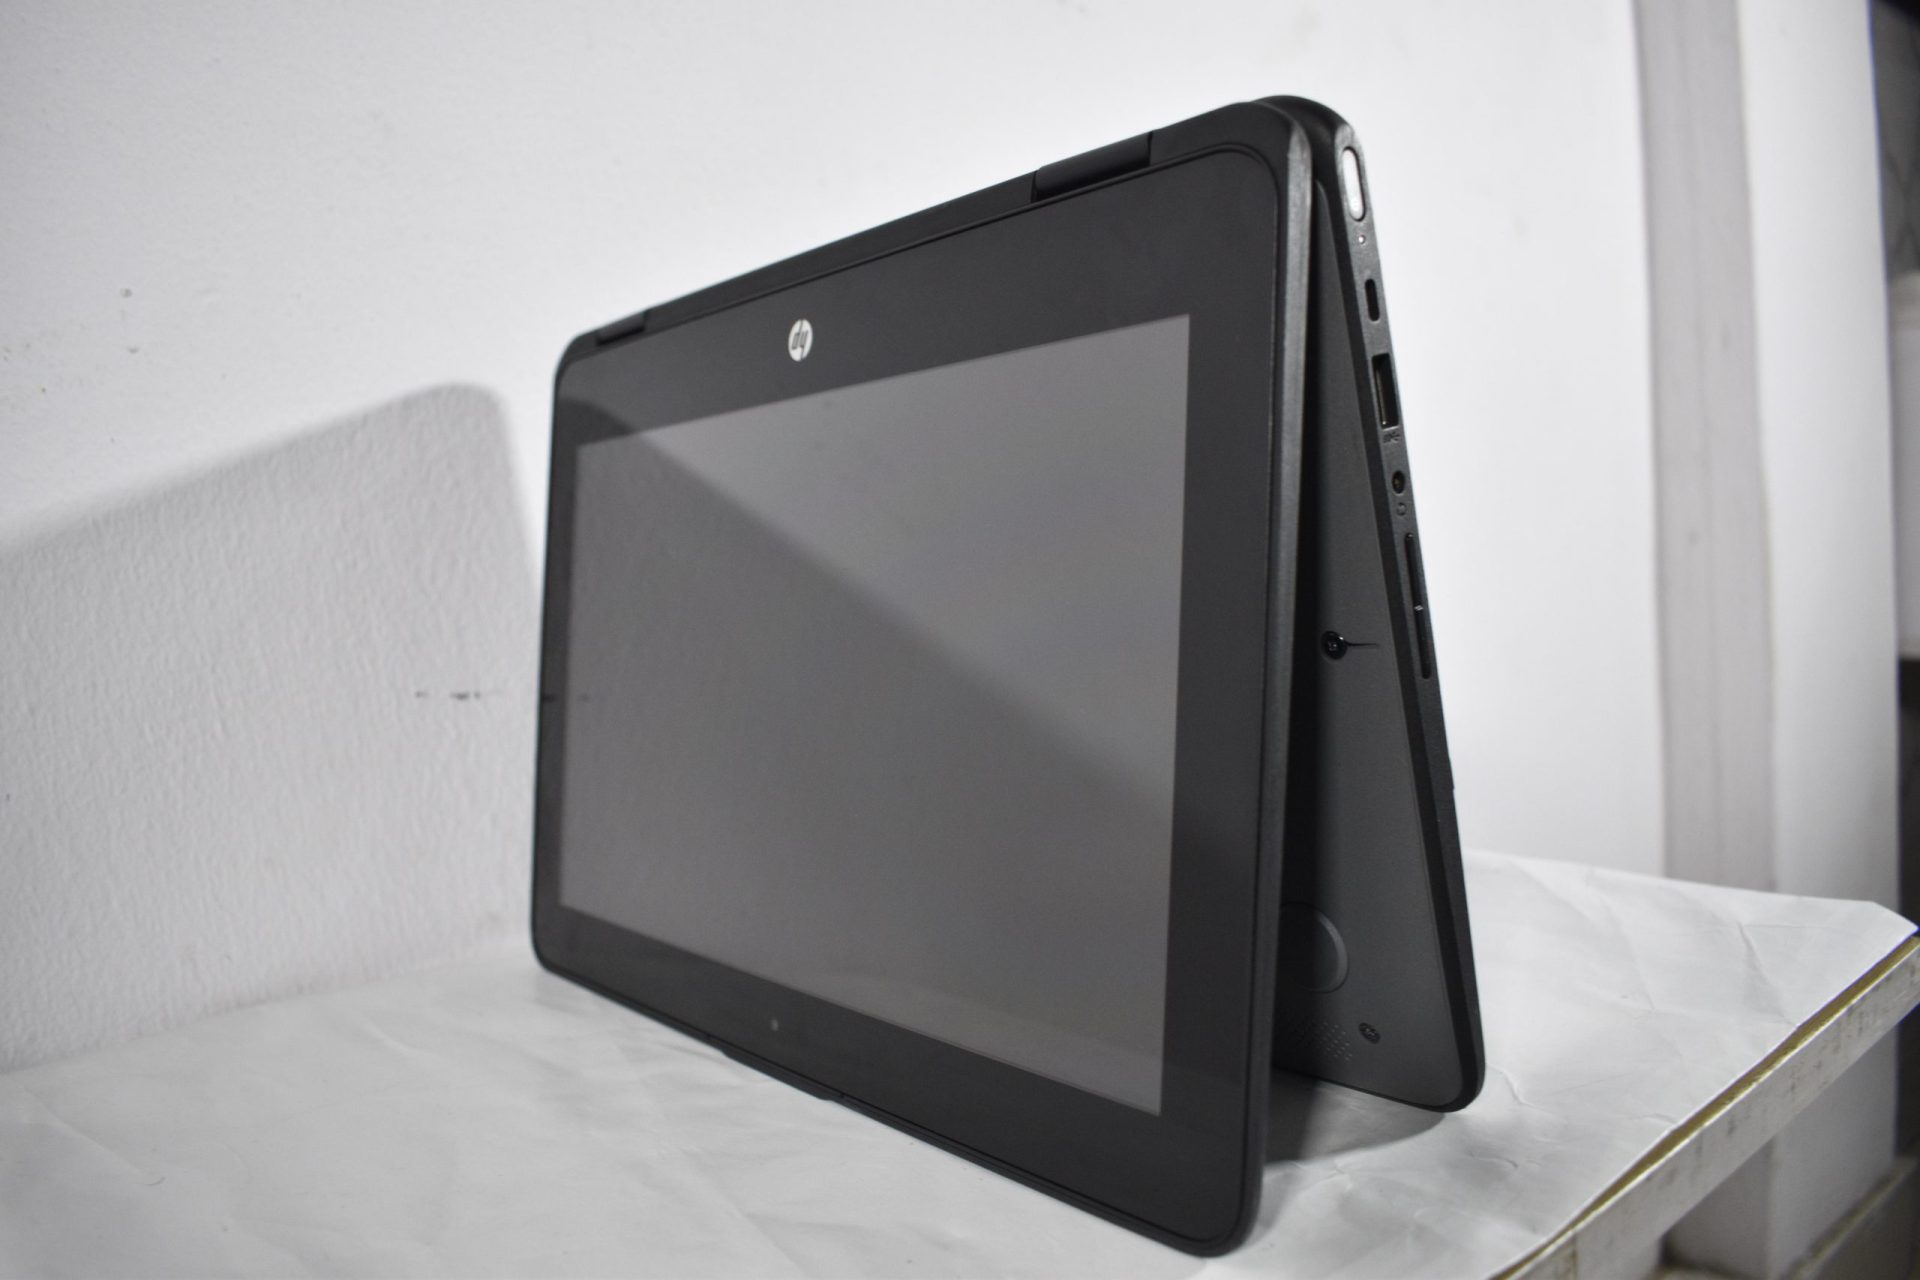 HP ProBook x360 11 G2 Intel Core m3 convertible Touchscreen 4GB 128GB – Used